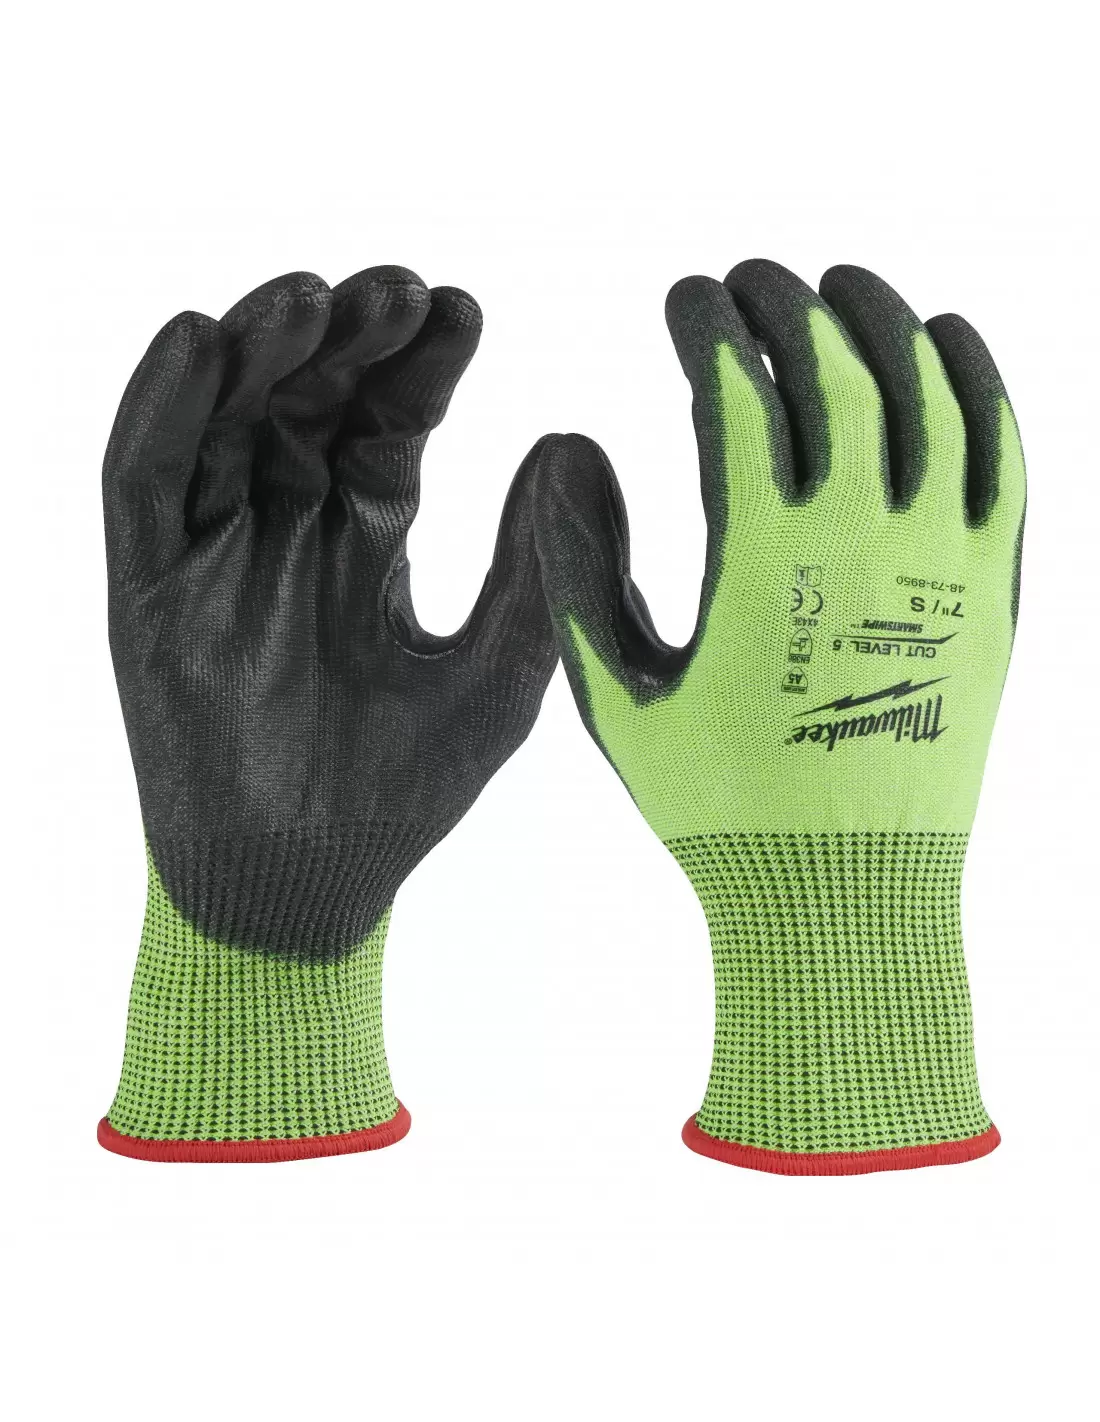 gants-haute-visibilite-anti-coupures-niveau-5-e-taille-8-m-4932479932-milwaukee.webp (1100×1422)